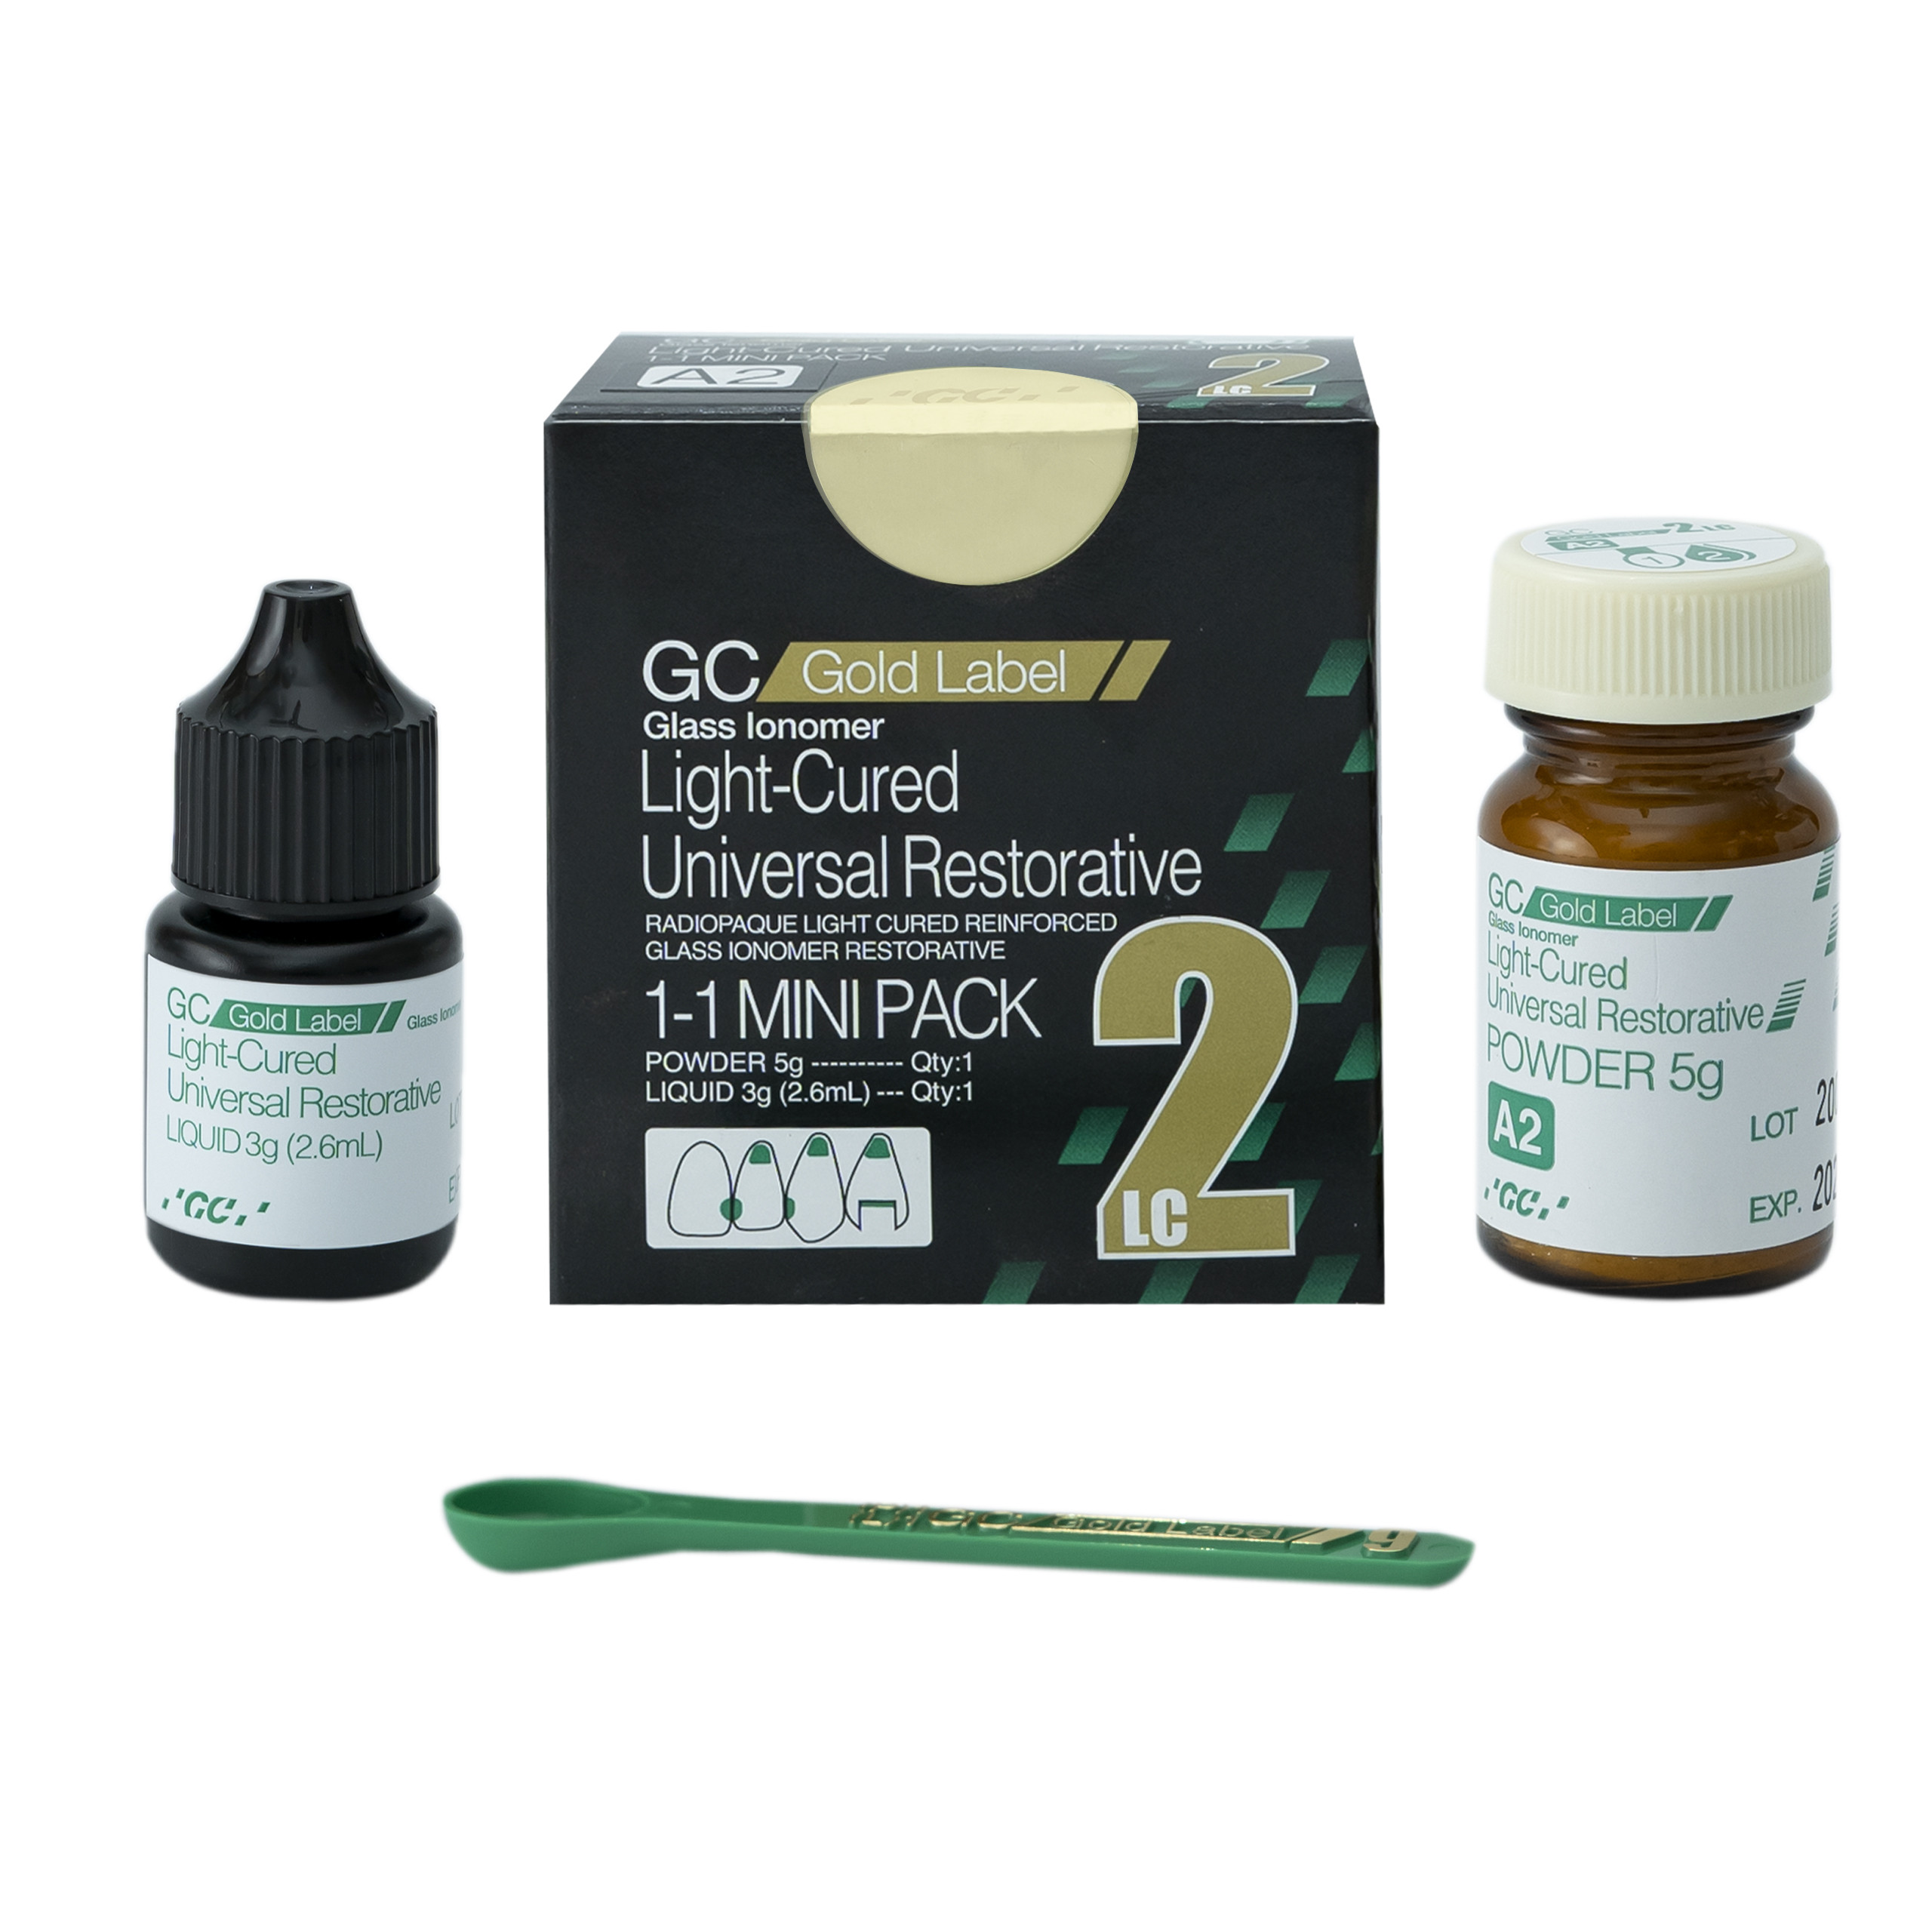 GC Gold Label Glass Ionomer Light - Cured Universal Restorative 1-1 Mini Pack Powder 5gm Liquid 3gm